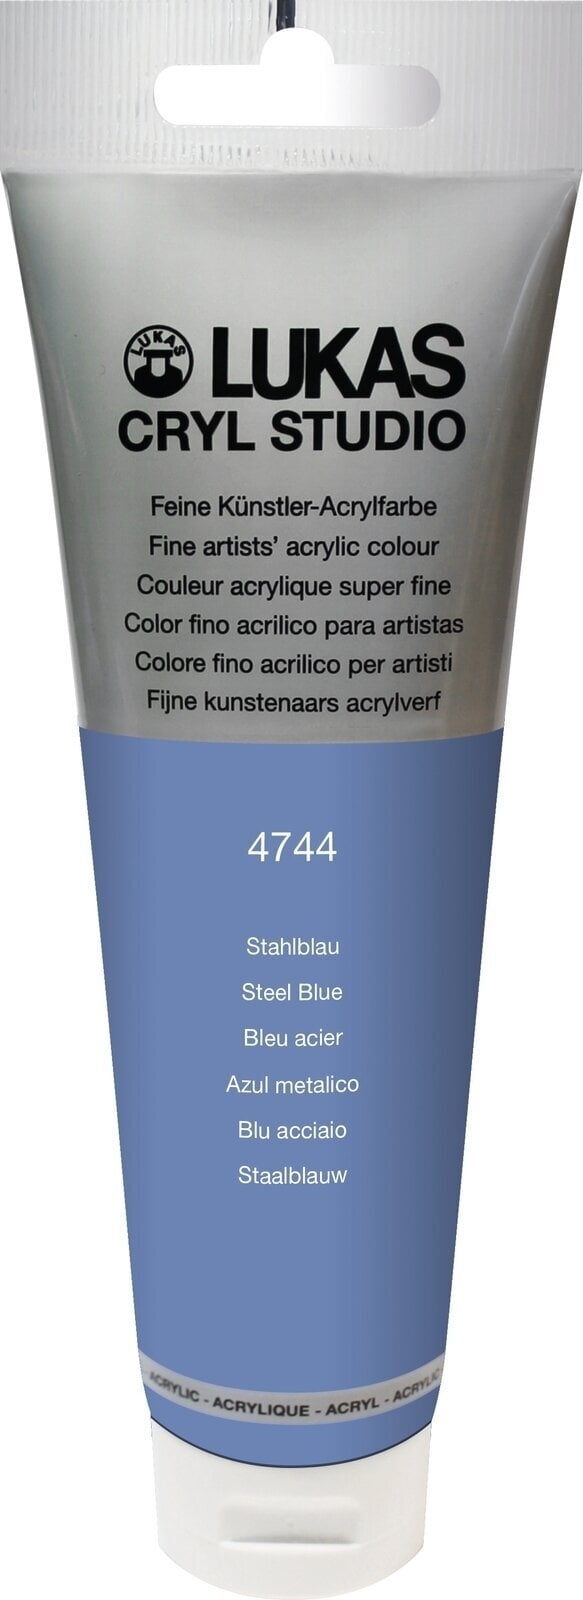 Peinture acrylique Lukas Cryl Studio Acrylic Paint Plastic Tube Peinture acrylique Steel Blue 125 ml 1 pc